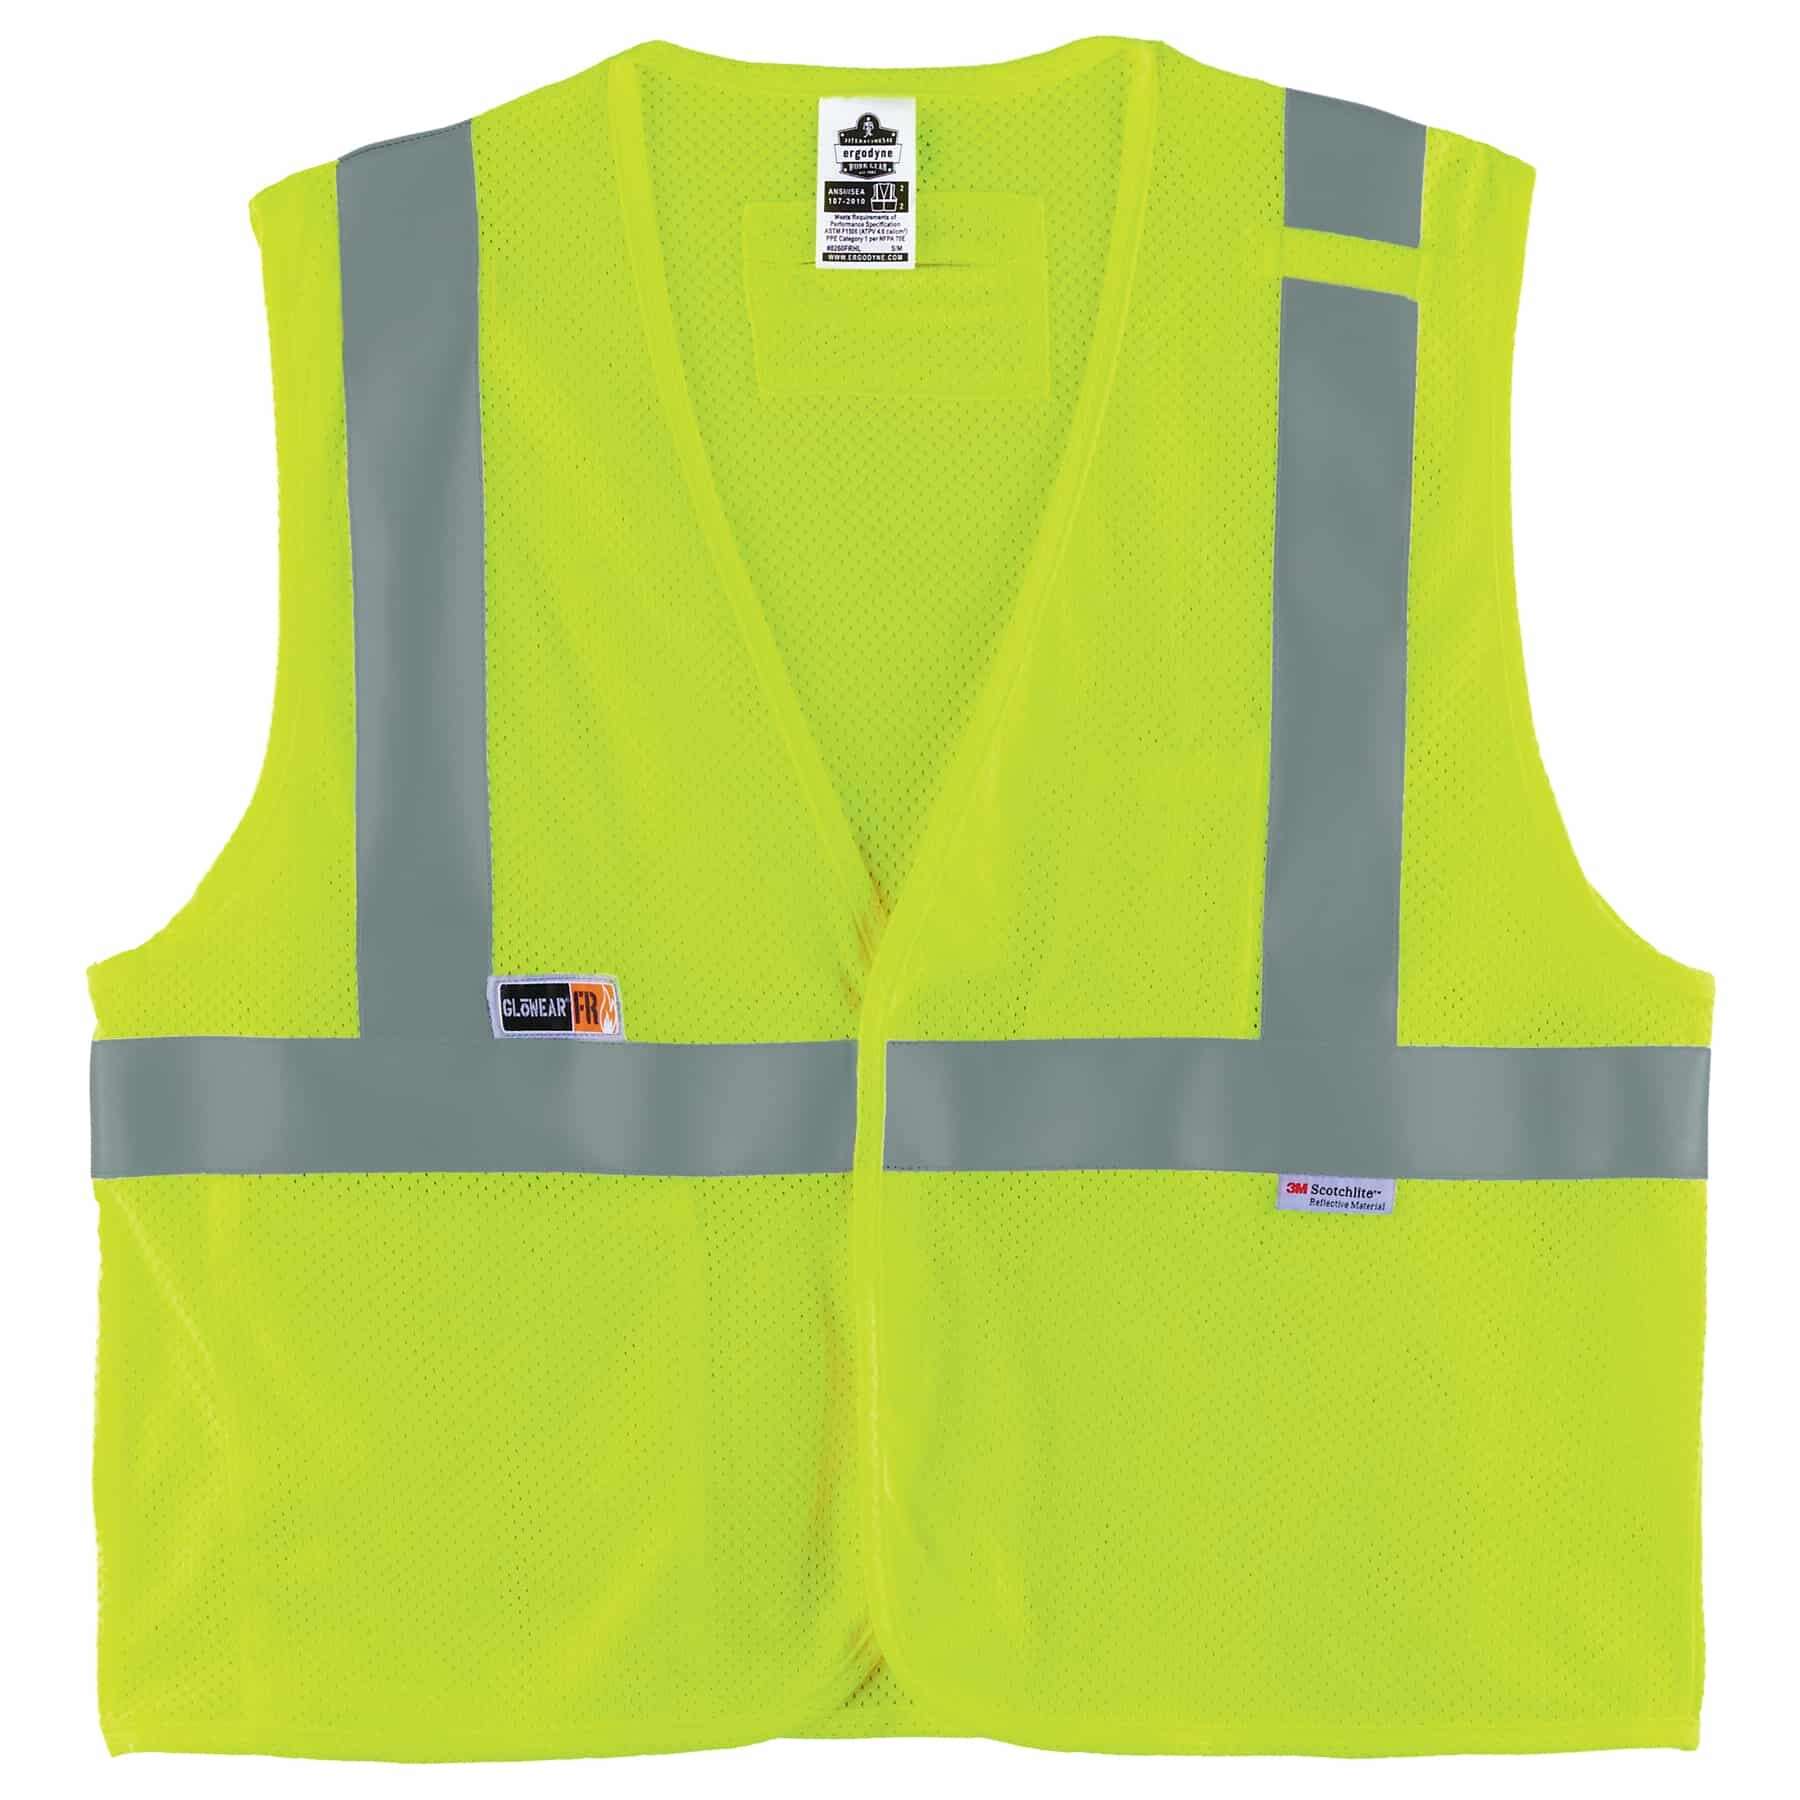 Ergodyne GloWear Class 2 Reflective Economy Mesh Safety Vest Yellow/Lime 